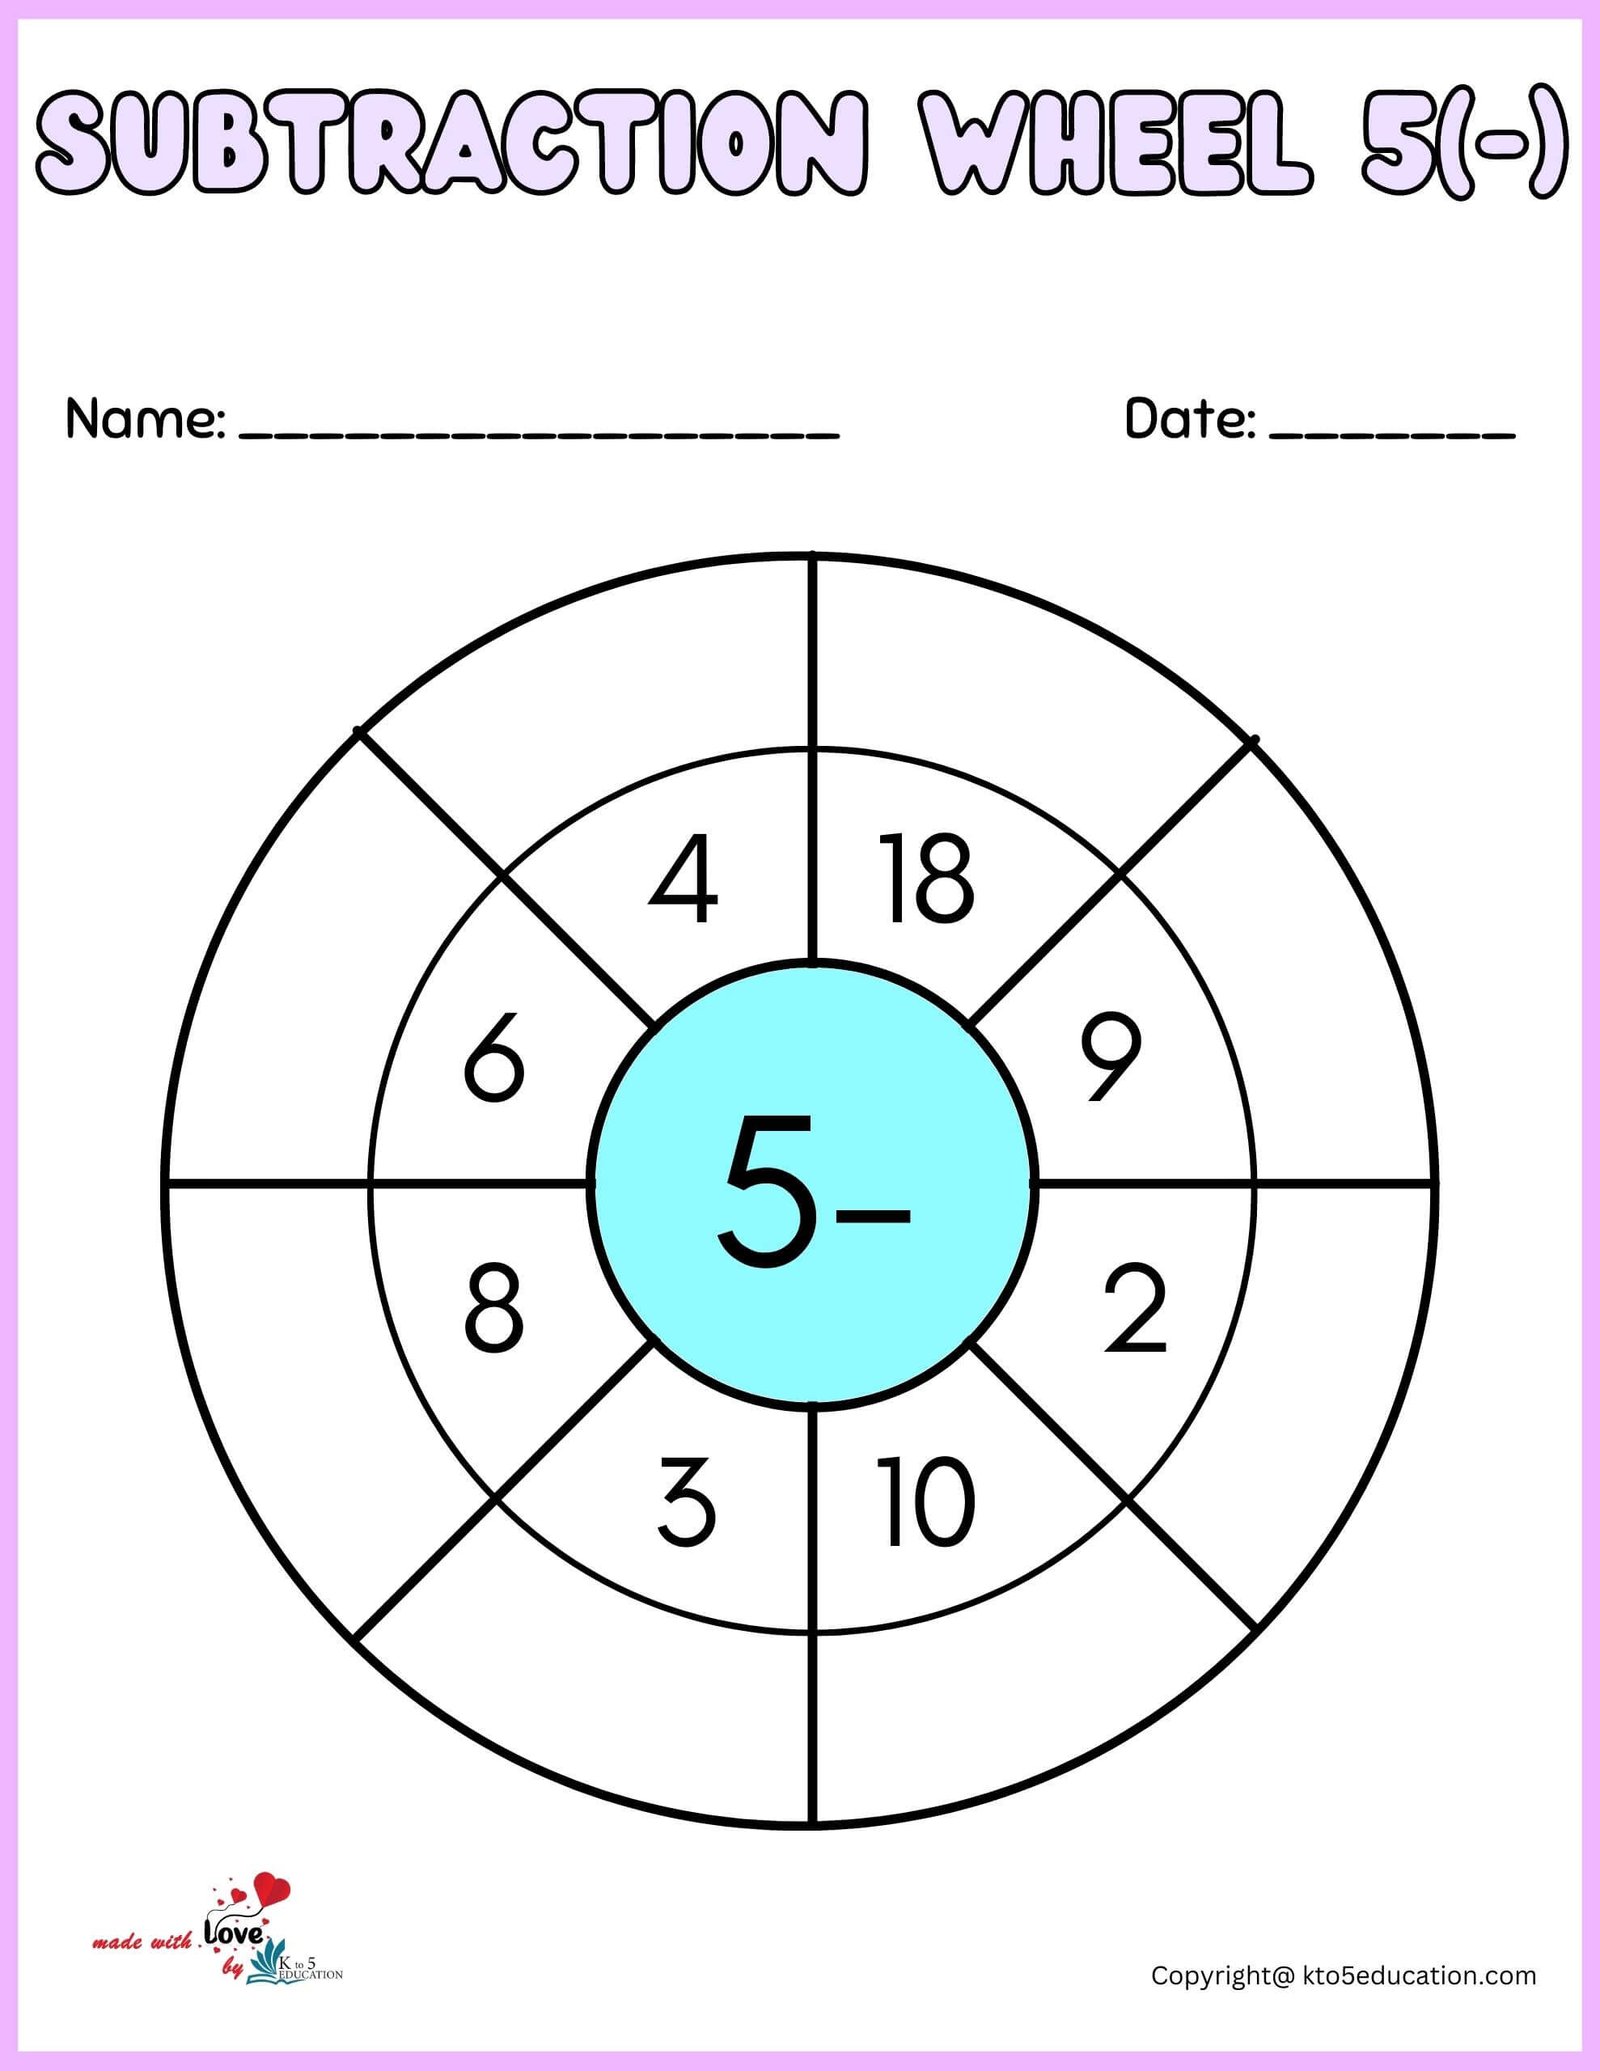 Subtraction Wheel Worksheets For Kids